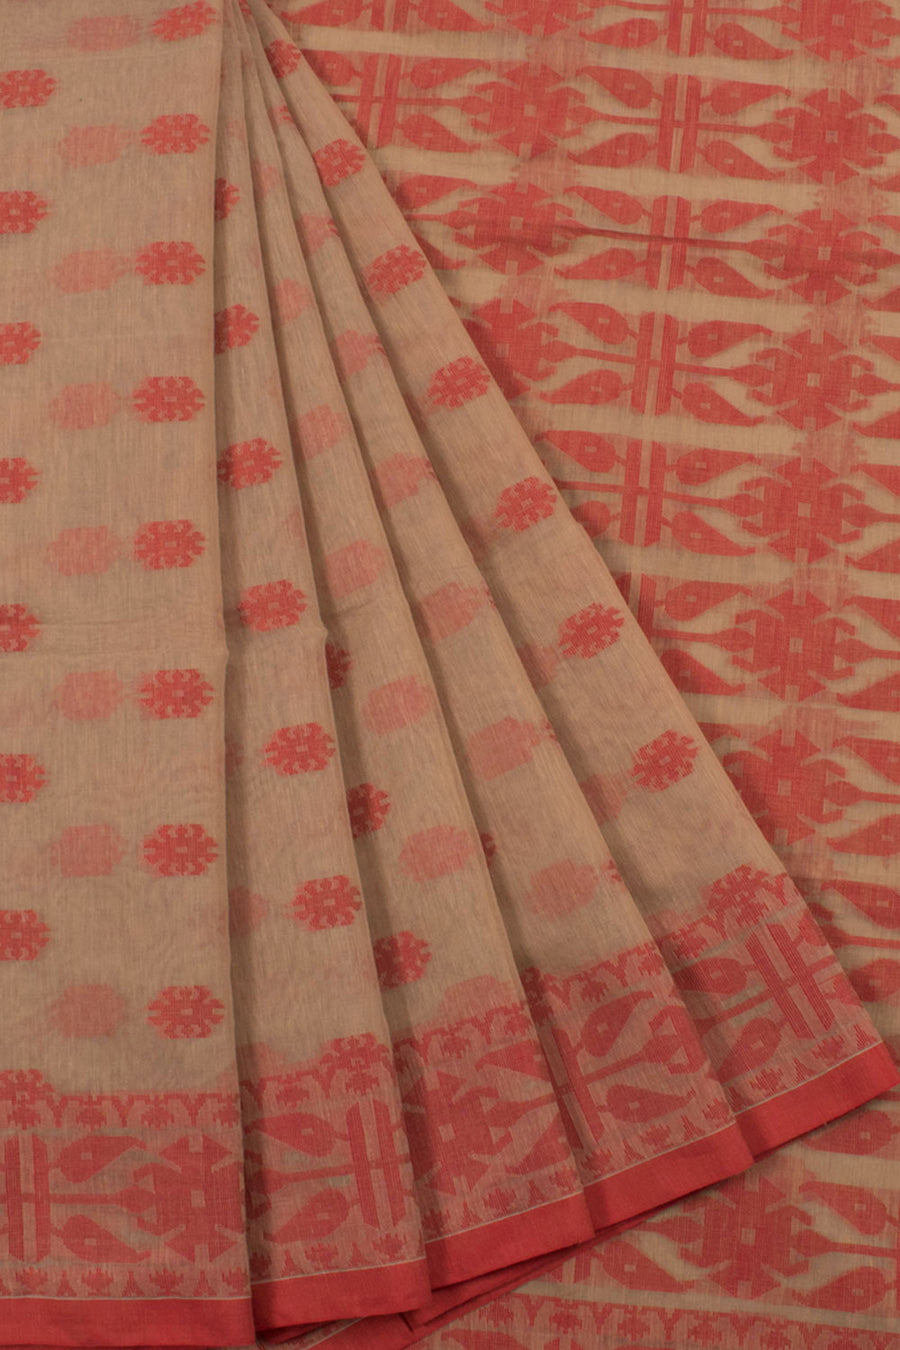 Handloom Jamdani Cotton Saree with Floral, Geometric Design